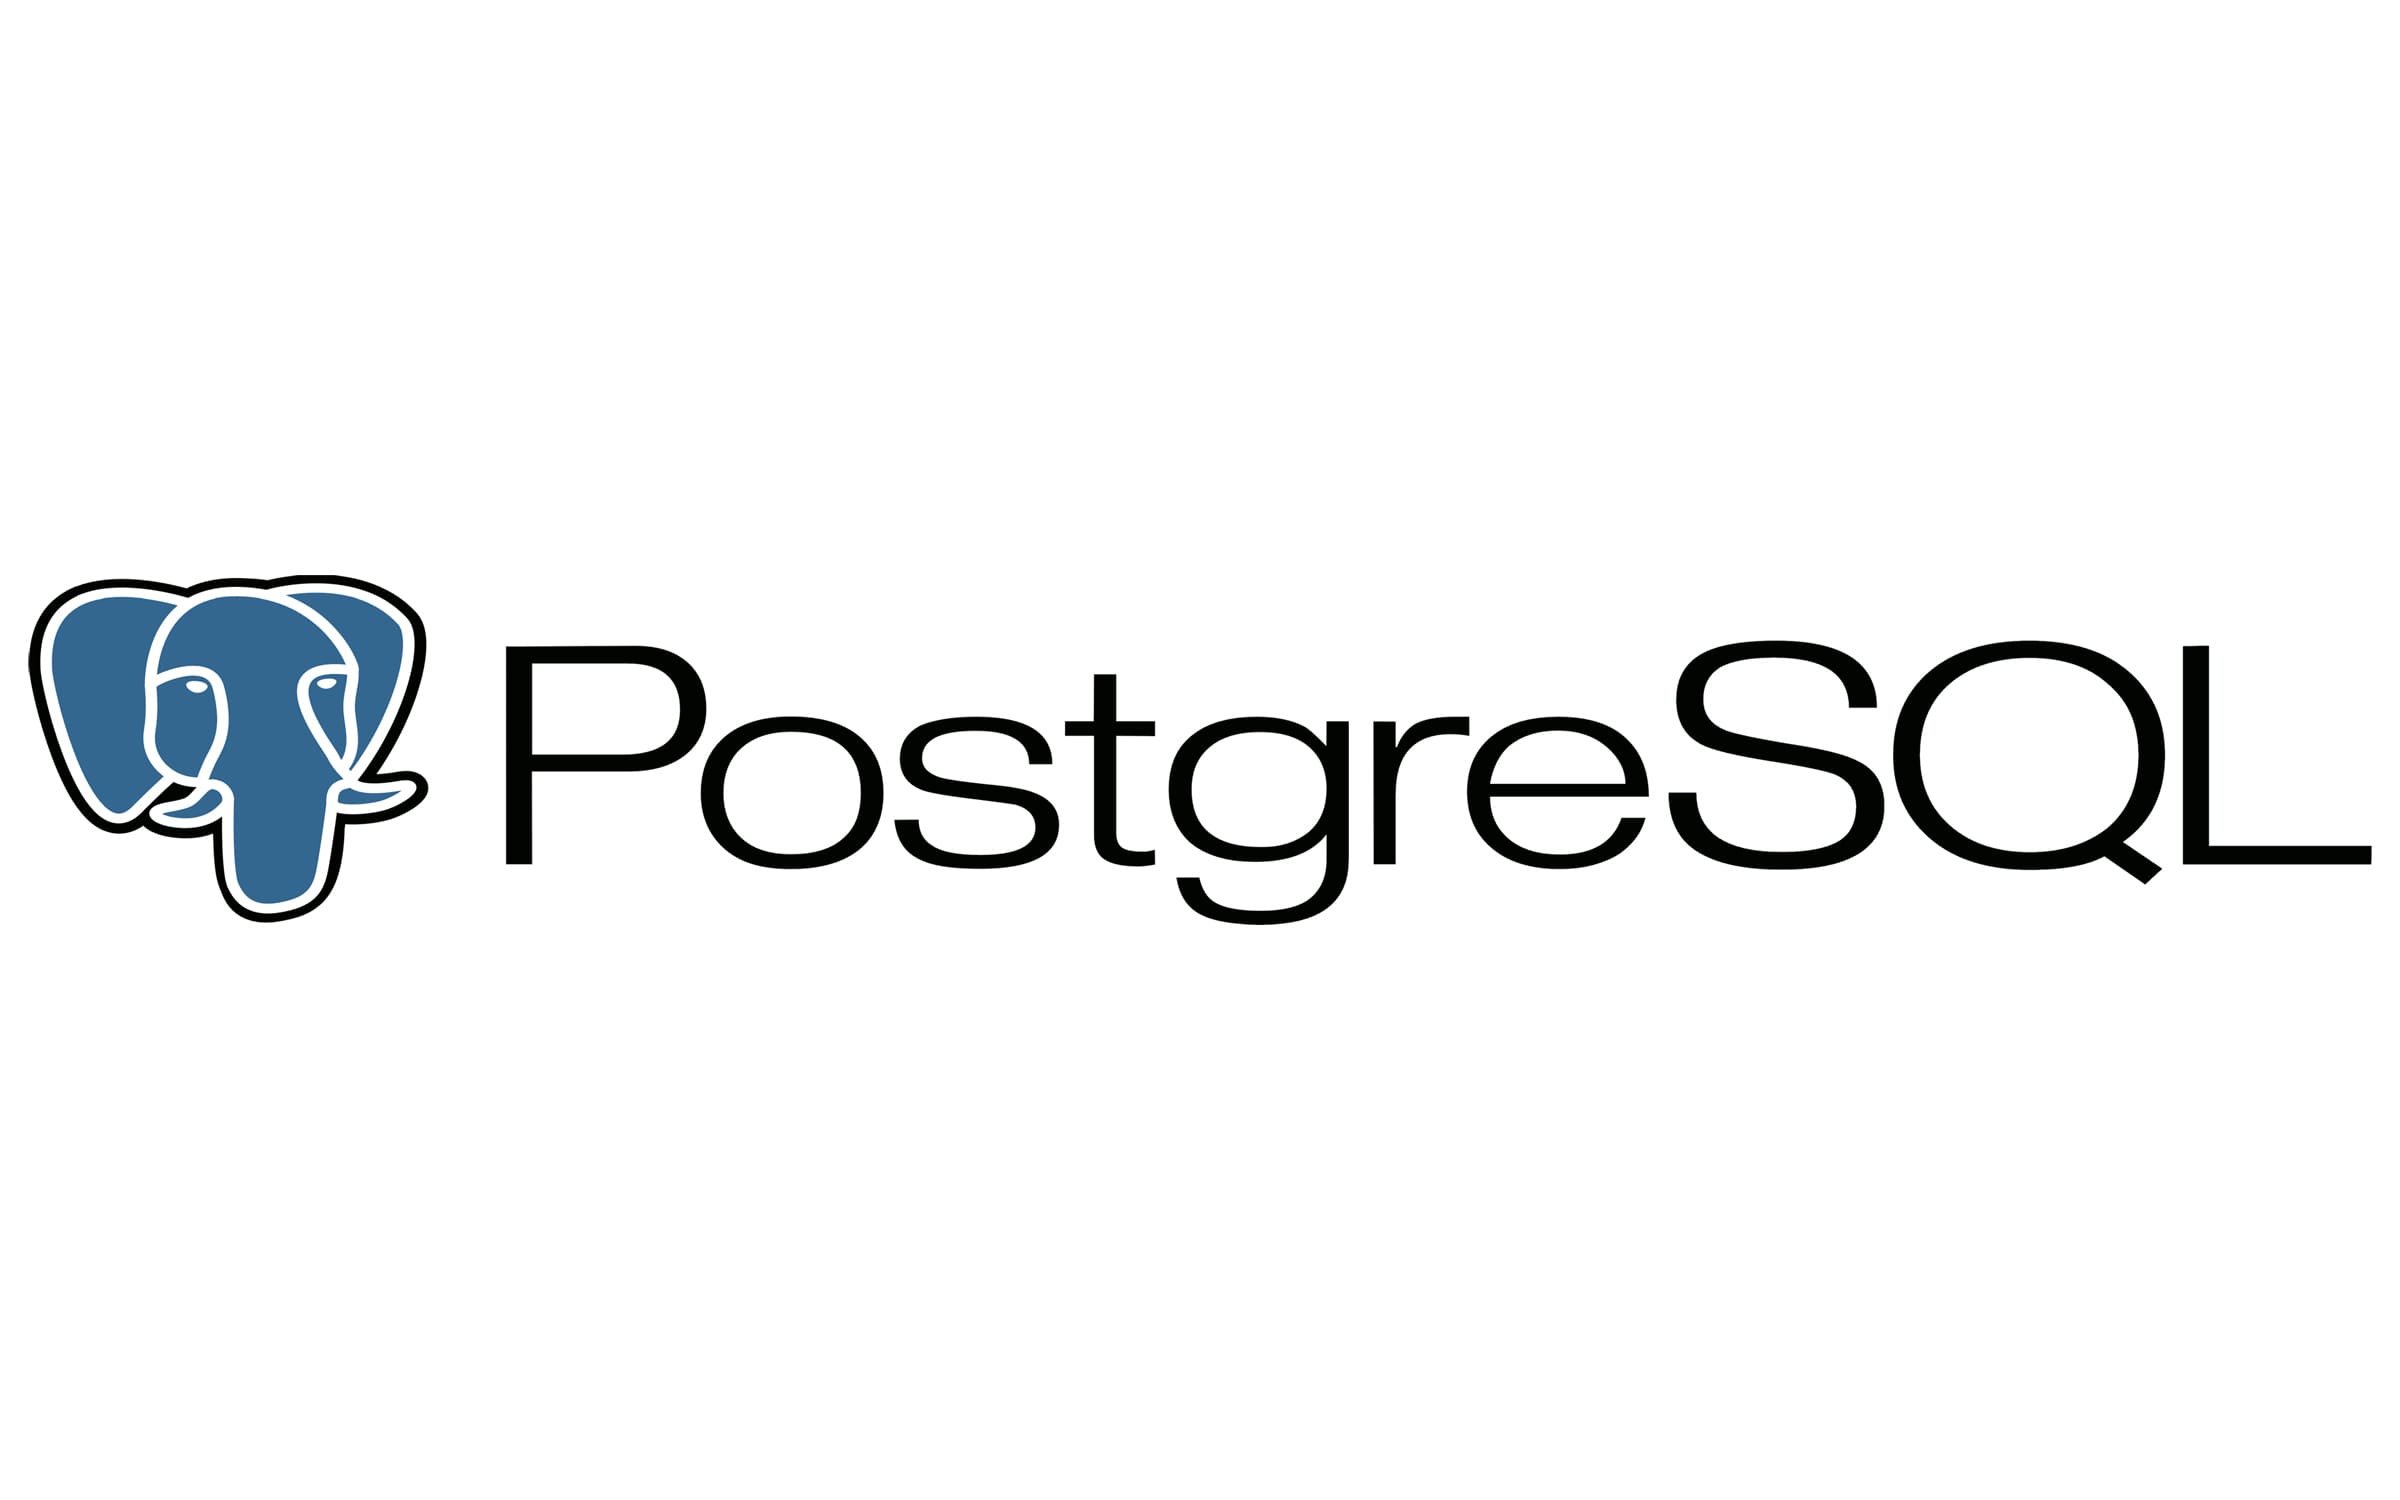 PostgreSQL.jpg